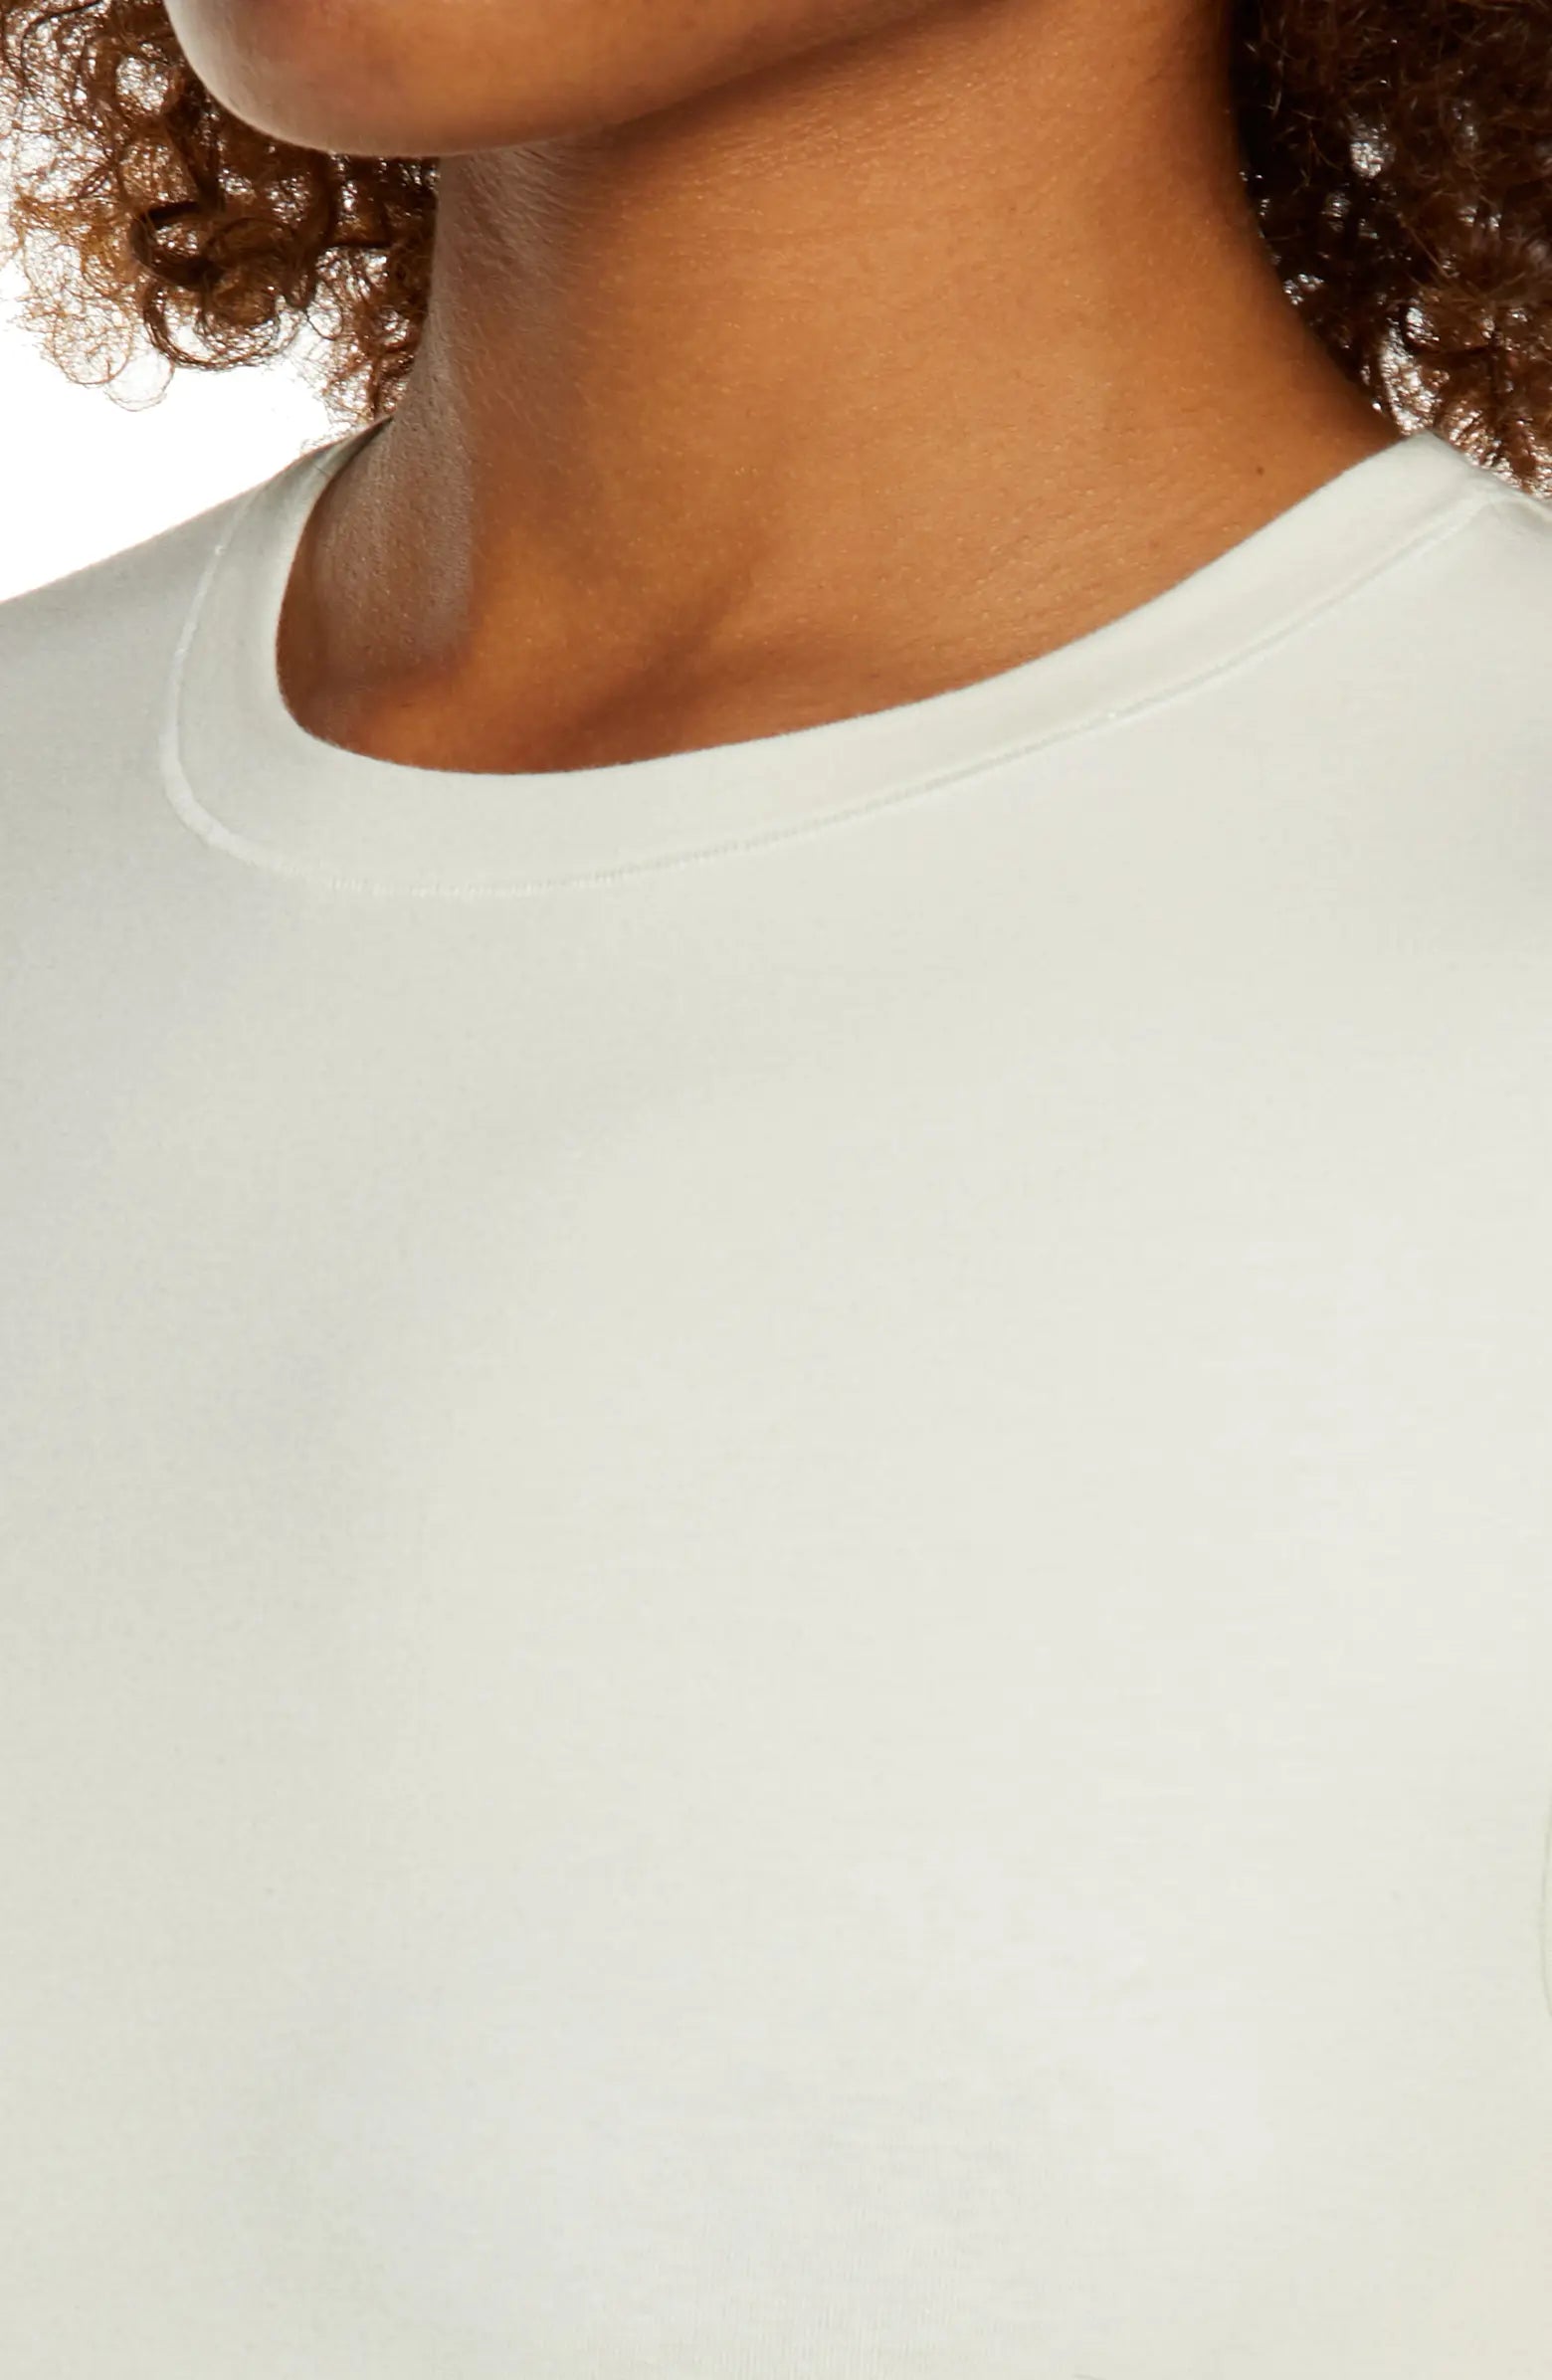 Skims Size Medium Bone Stretch Cotton Jersey T-Shirt Bodysuit Short Sleeve  